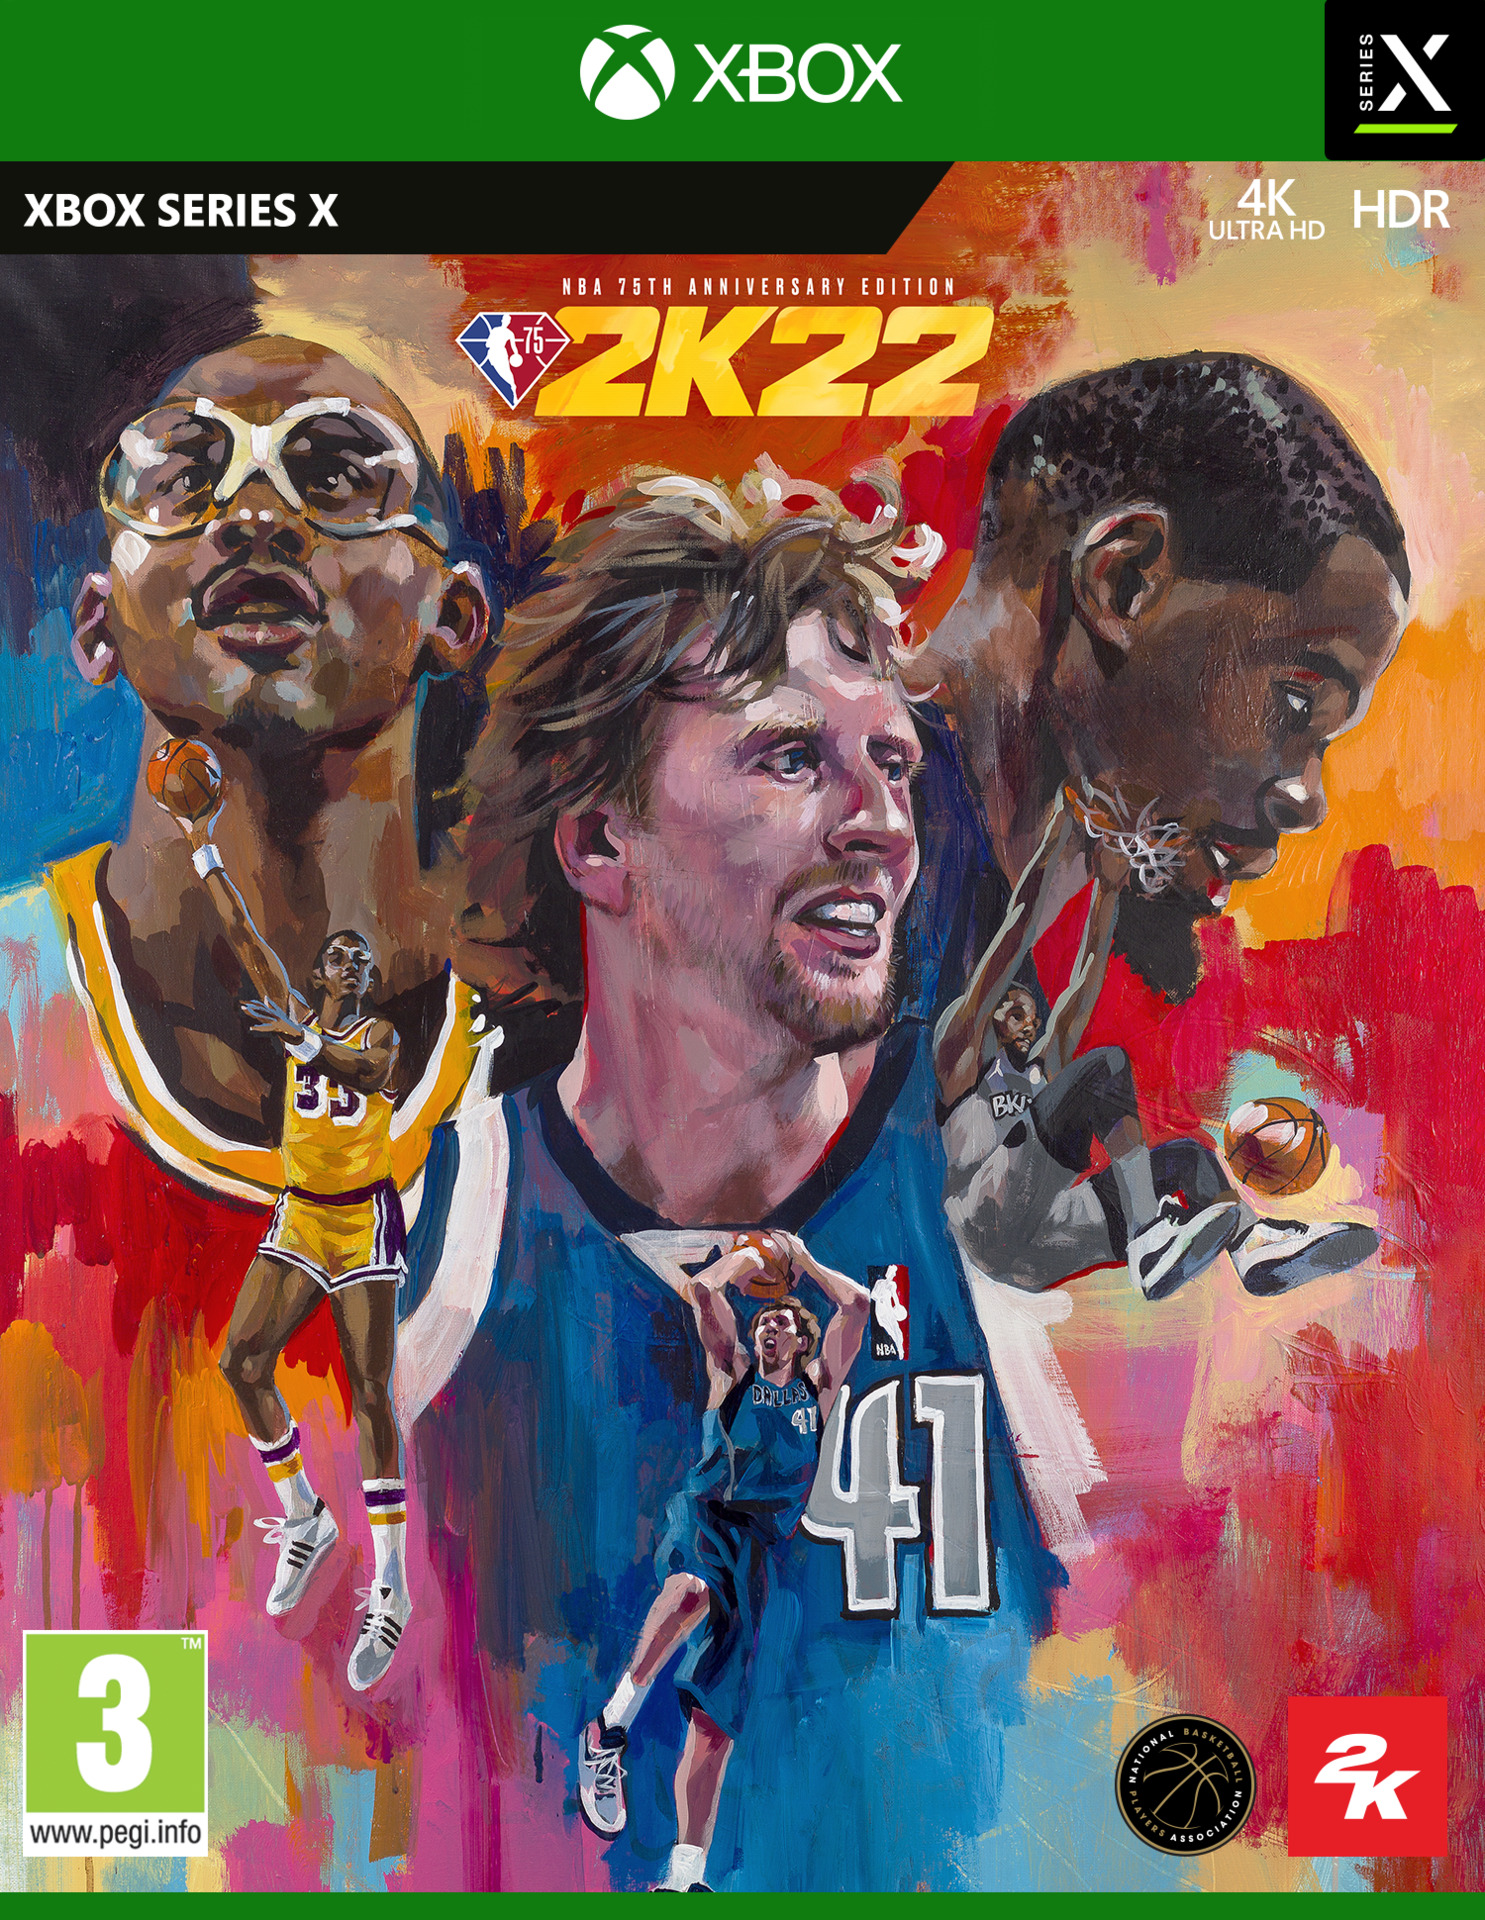 NBA 2K22 - 75th Anniversary Edition (XSX)